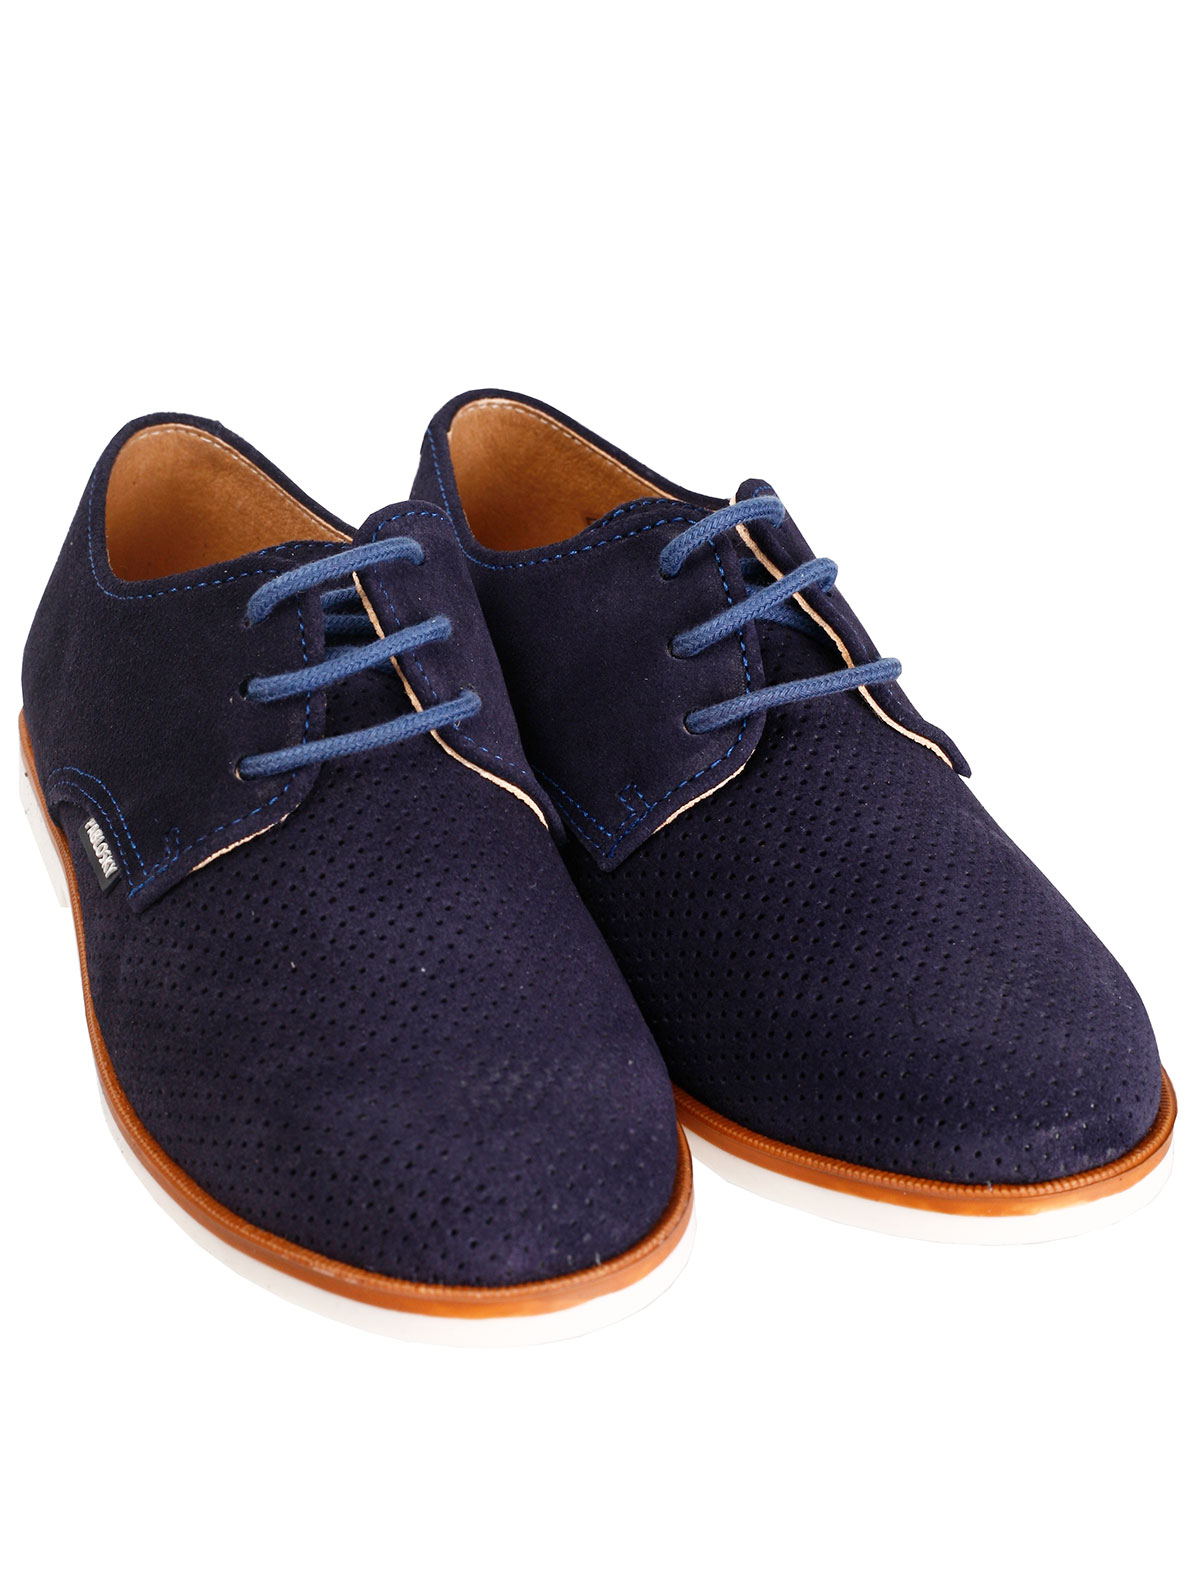 Ботинки Pablosky 2643766, цвет синий, размер 34